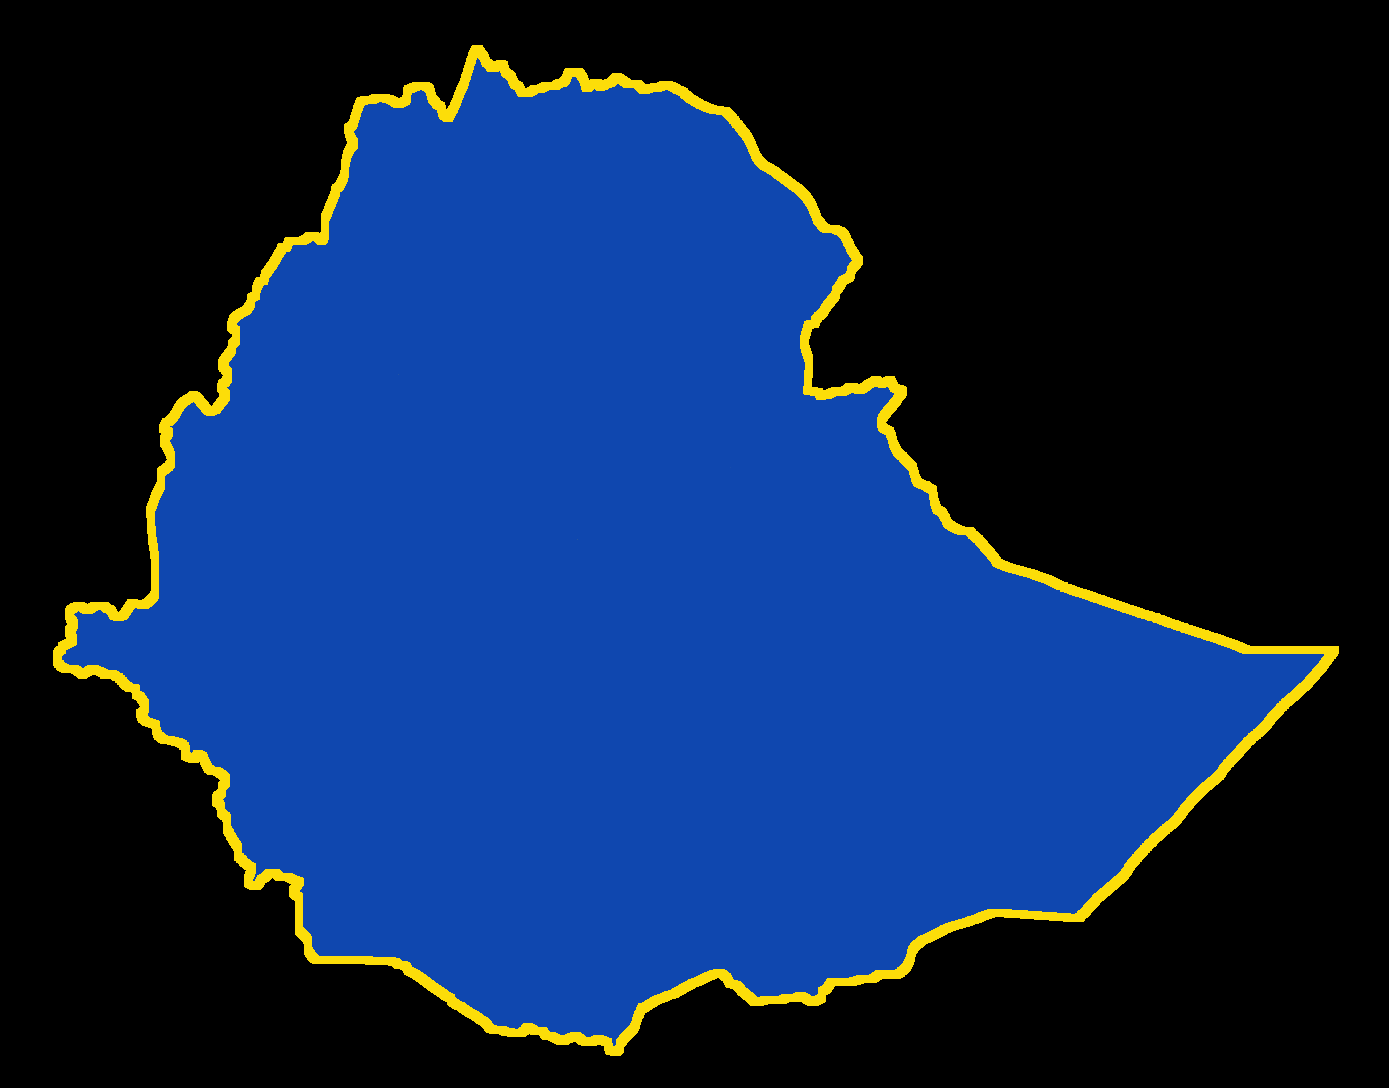 Shape of Ethiopia (B) by HispaniolaNewGuinea on DeviantArt